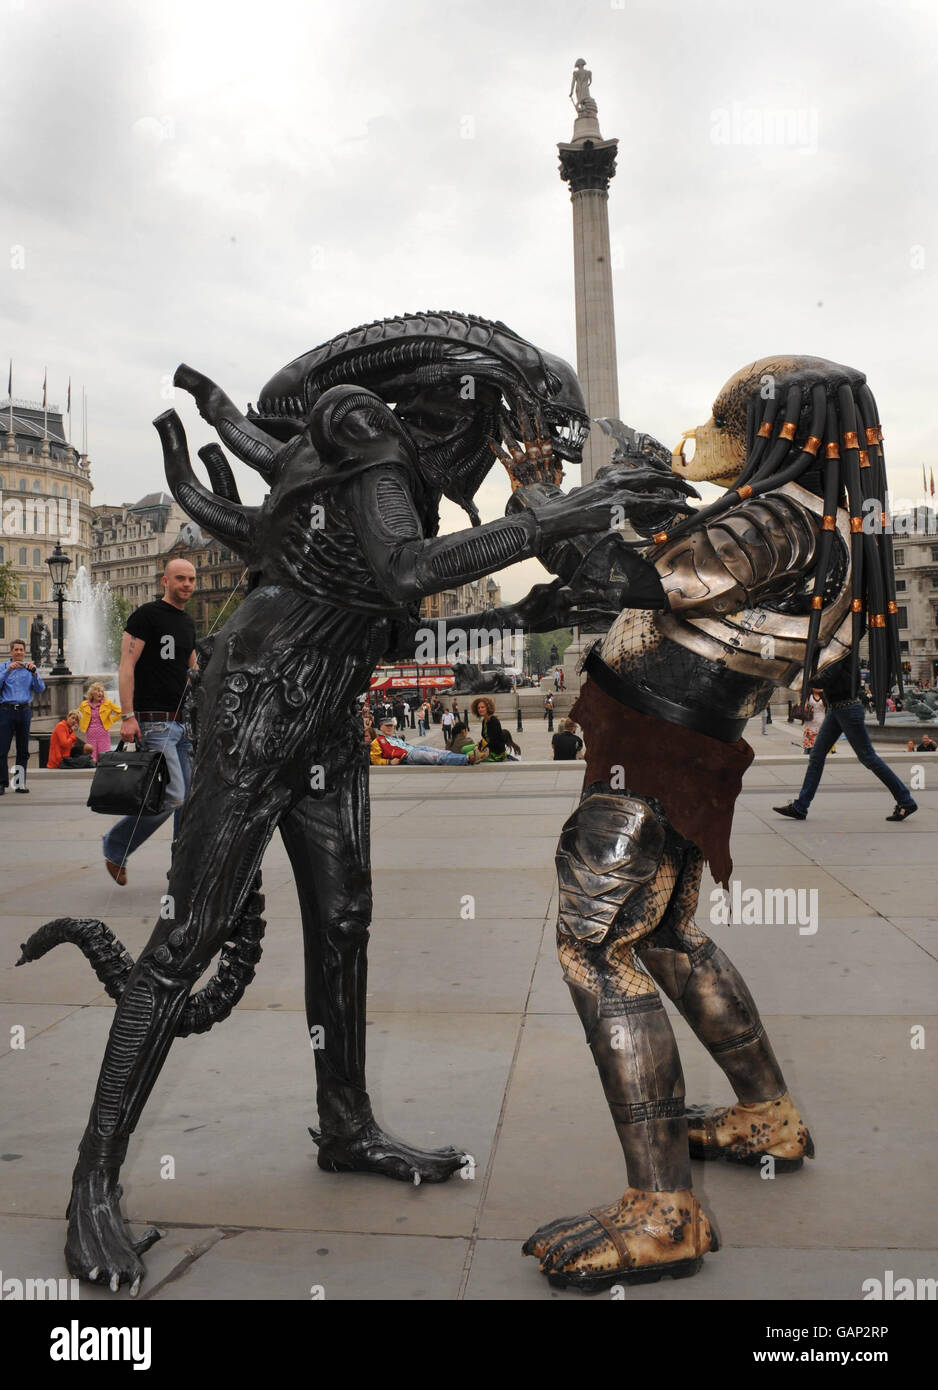 Showbiz alien predator hi-res stock photography and images - Alamy